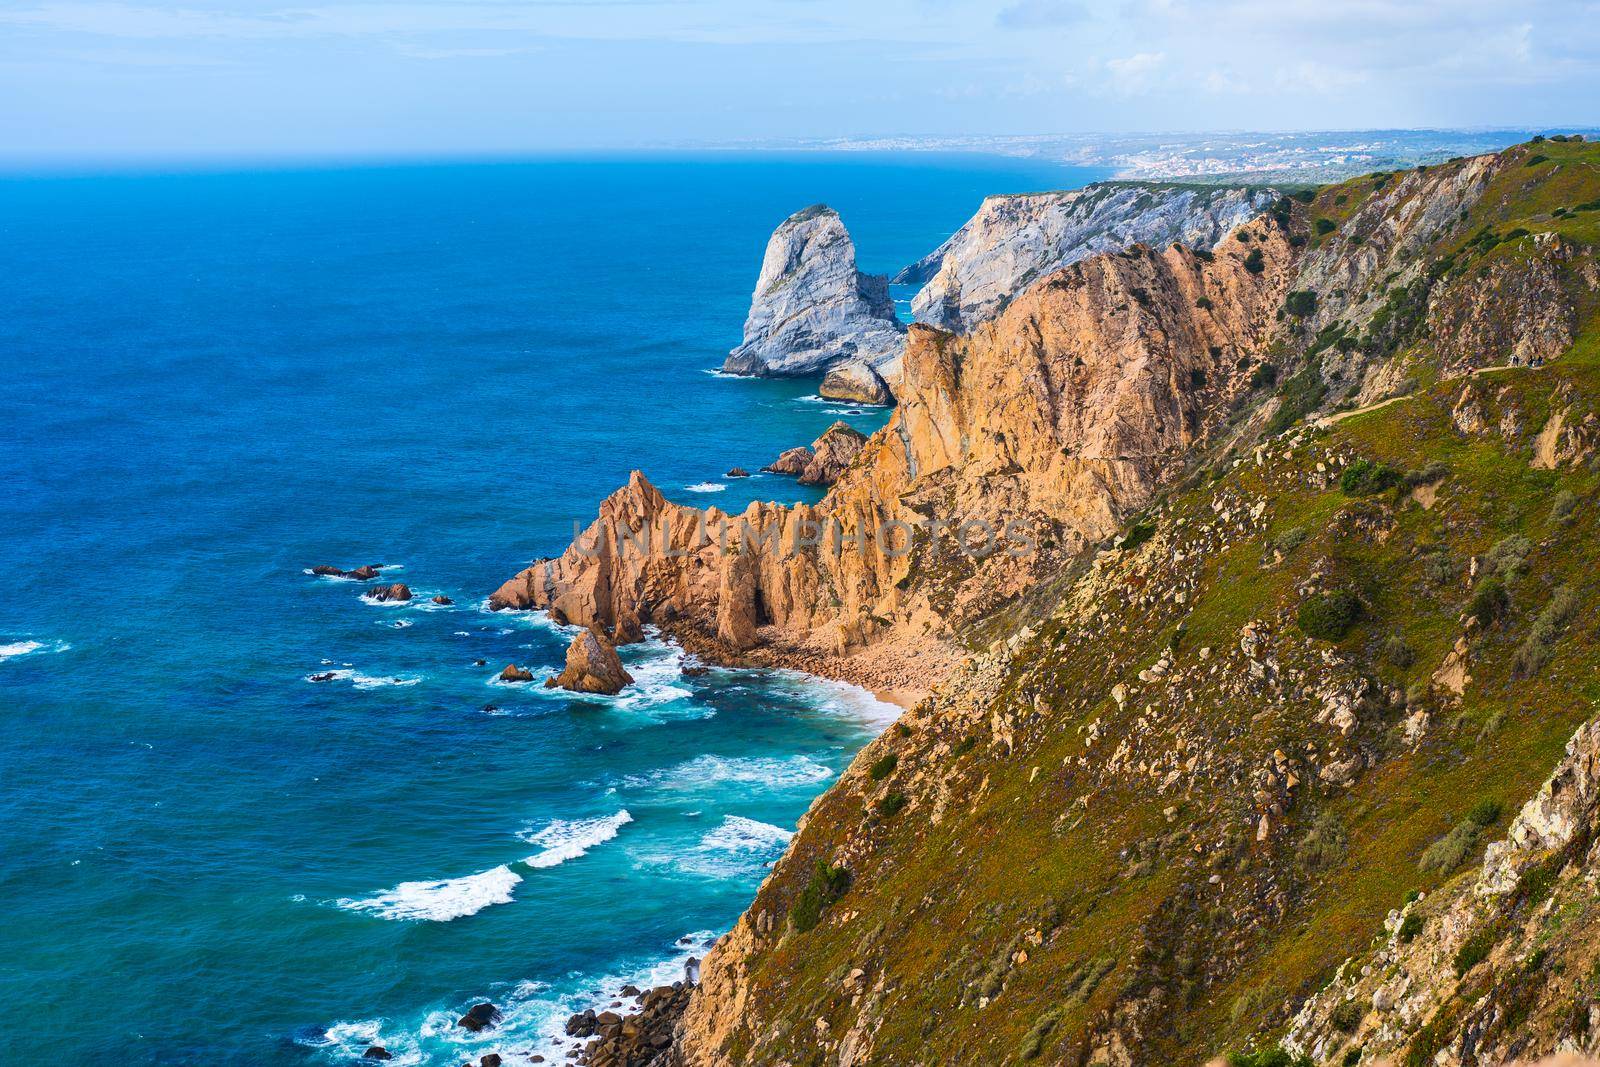 Atlantic ocean view with cliff. View of Atlantic Coast at Portugal, Cabo da Roca. Summer day. Seaside. Coastline. Beautiful landscape